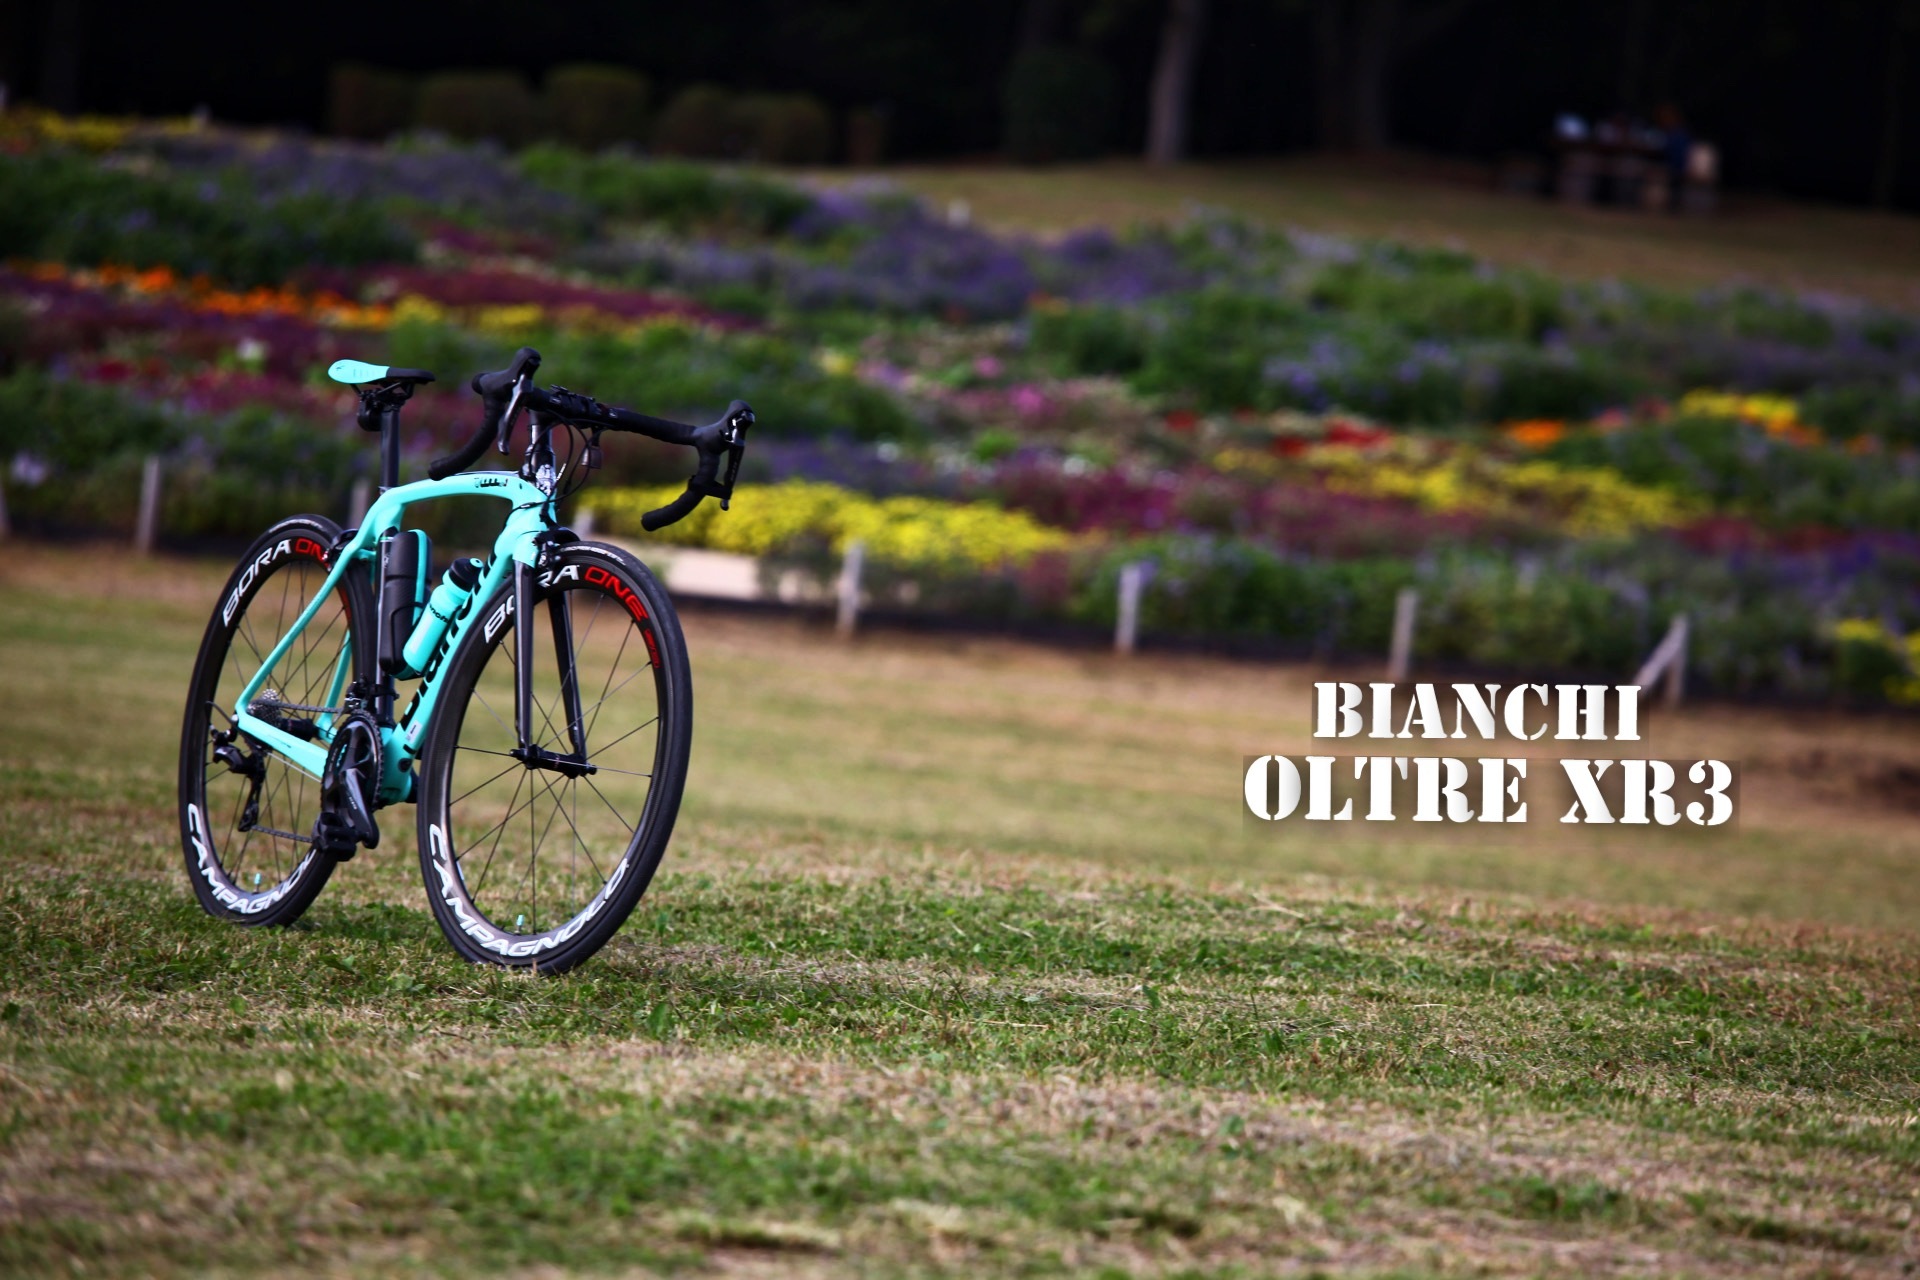 Bianchi OLTRE XR3 ［前編］ロードバイク歴１０年目にして最高の相棒を